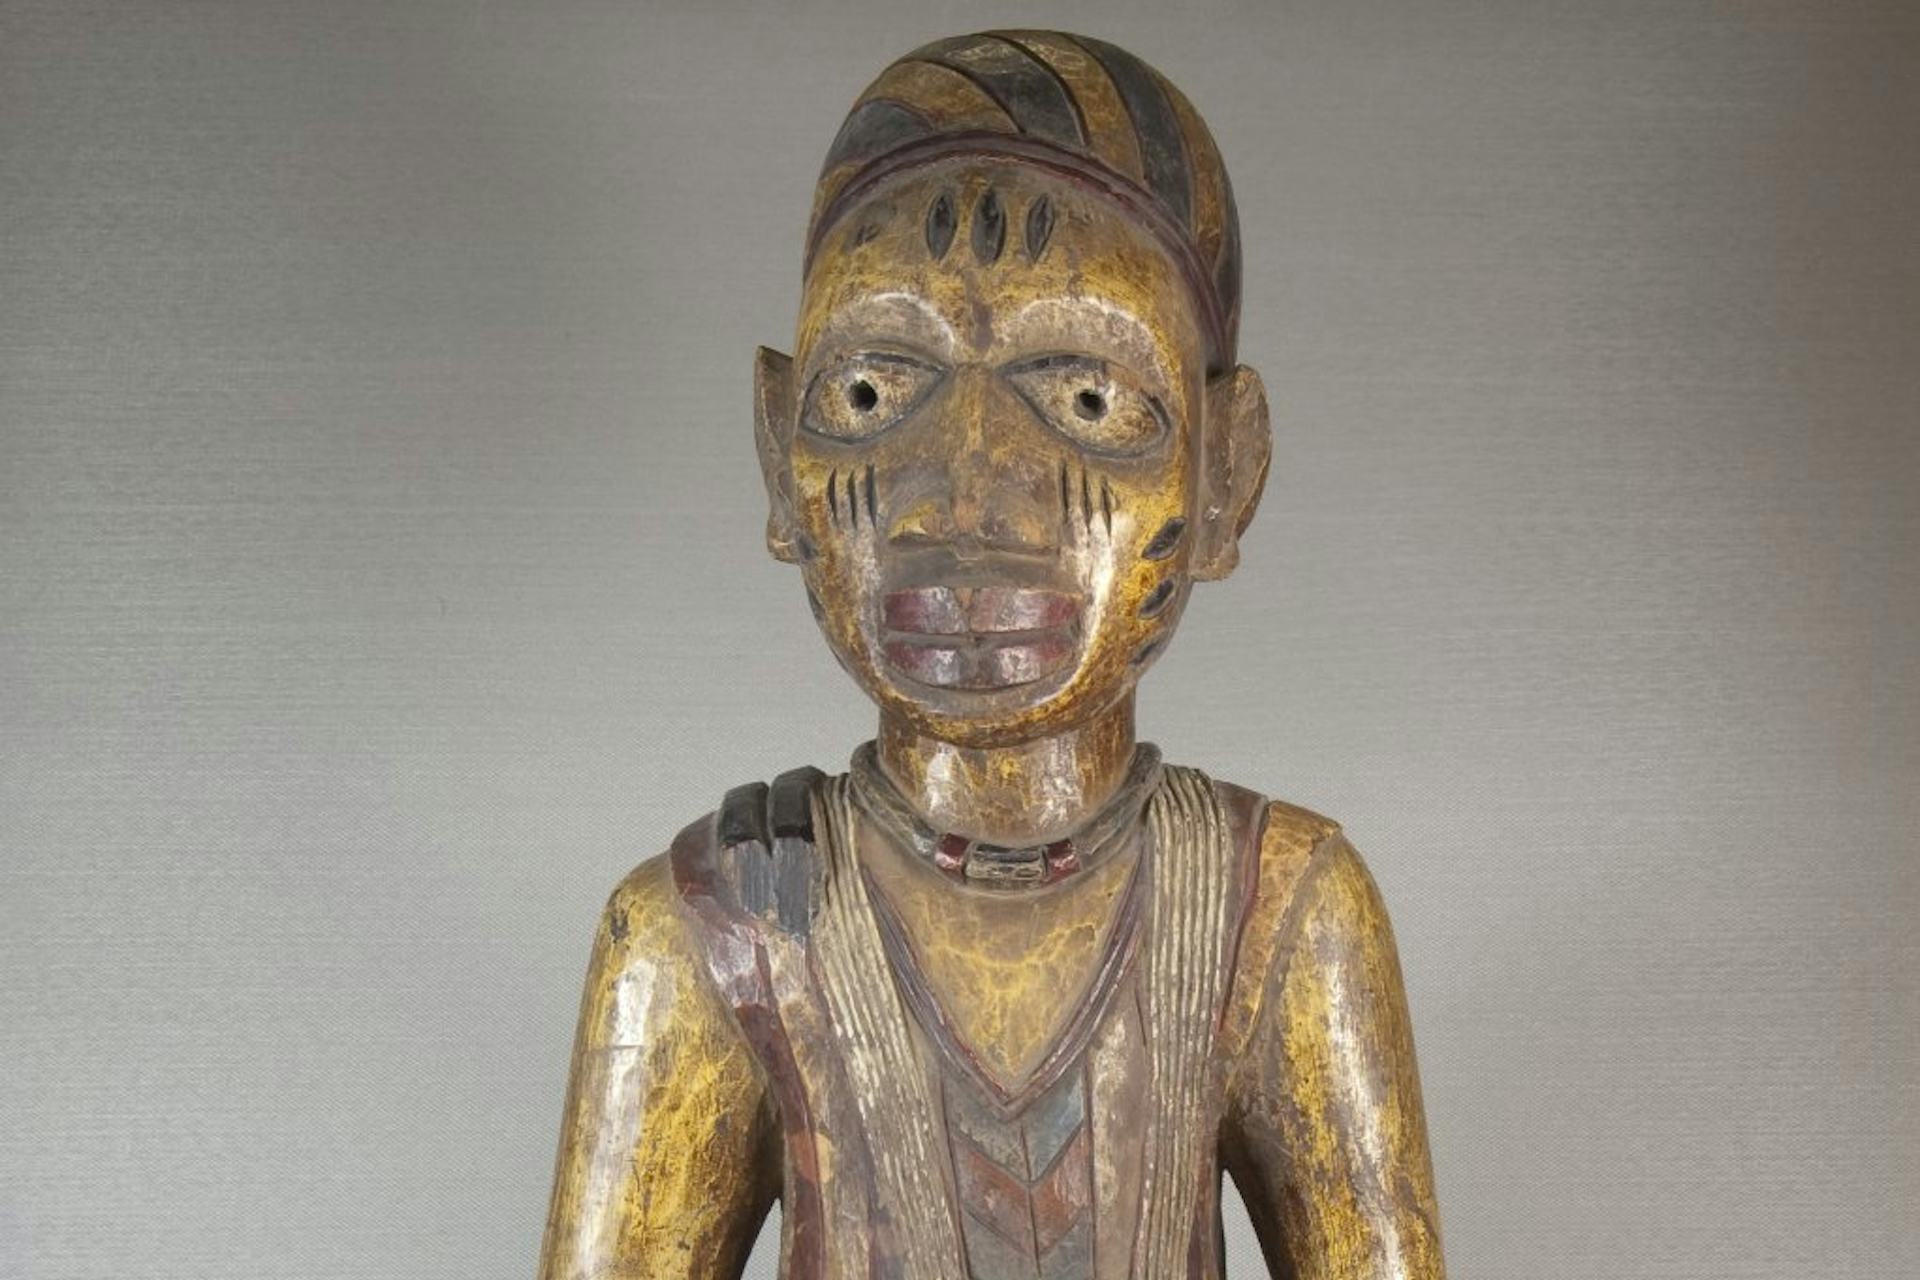 Altar figure for an Orisha by Yoruba artist (late 19th or early 20th century).